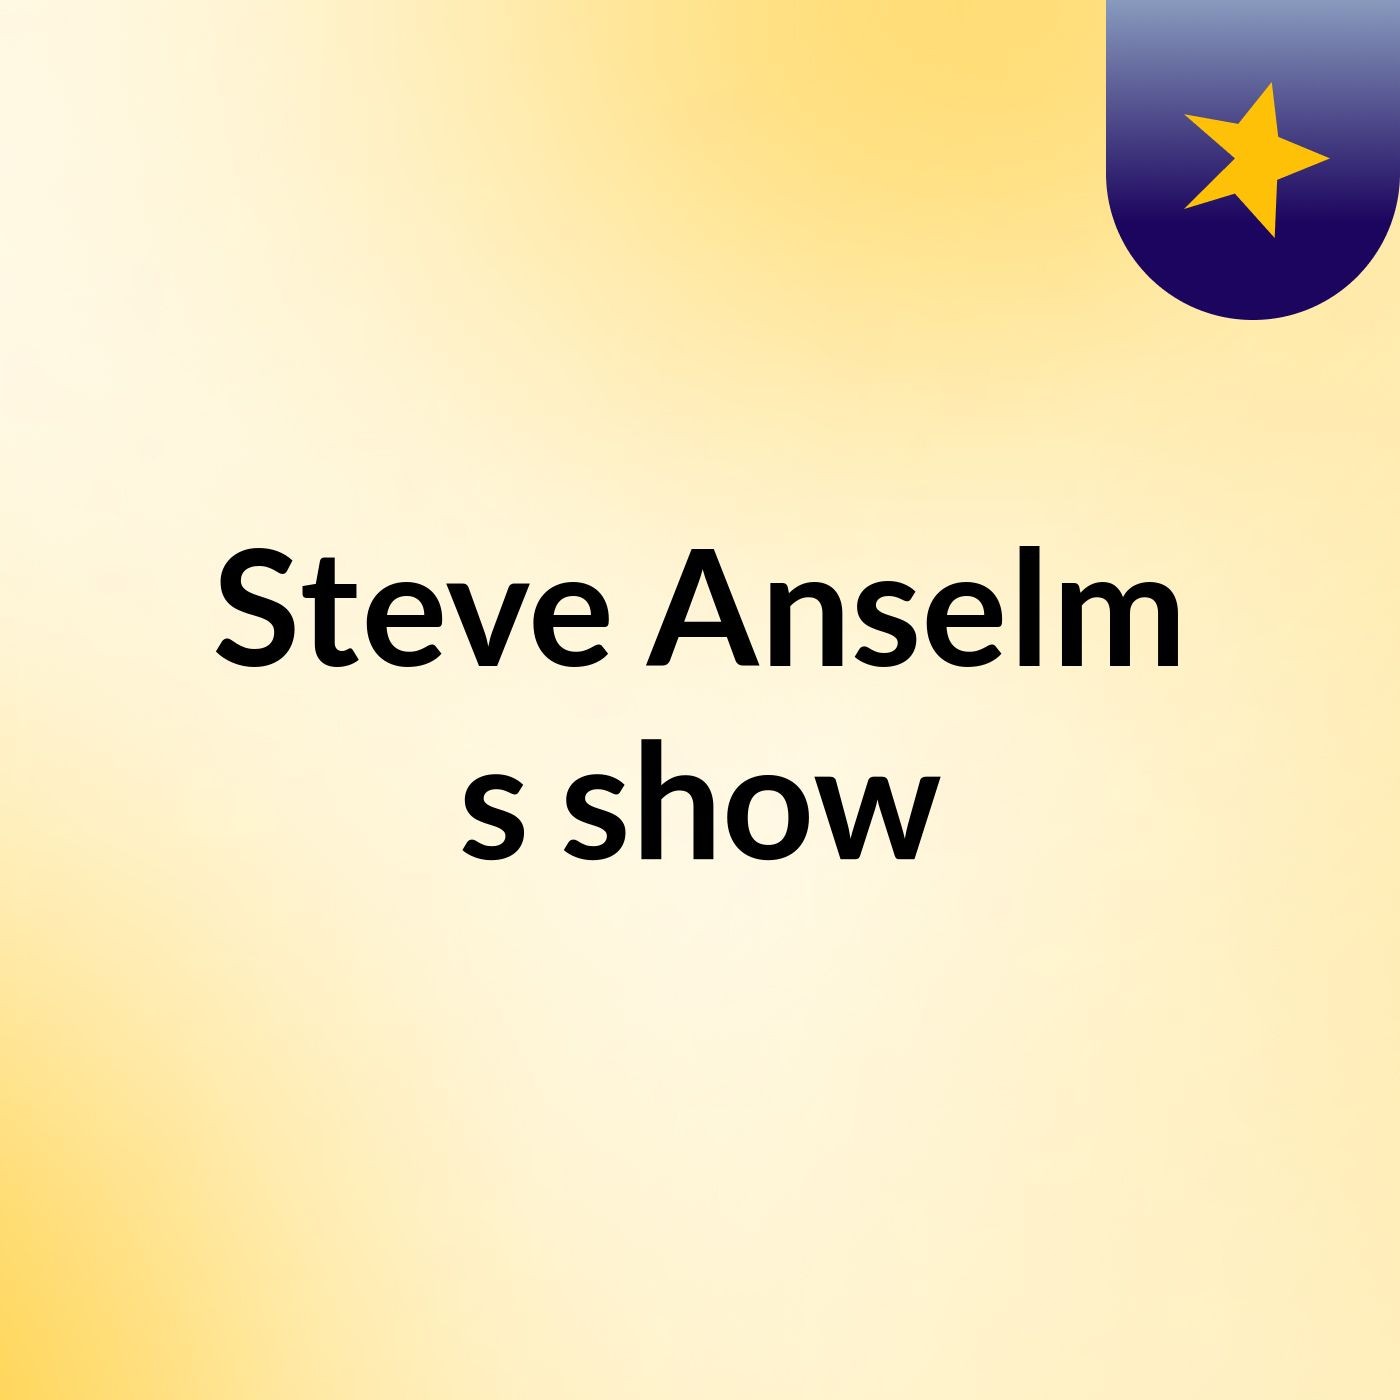 Steve Anselm's show